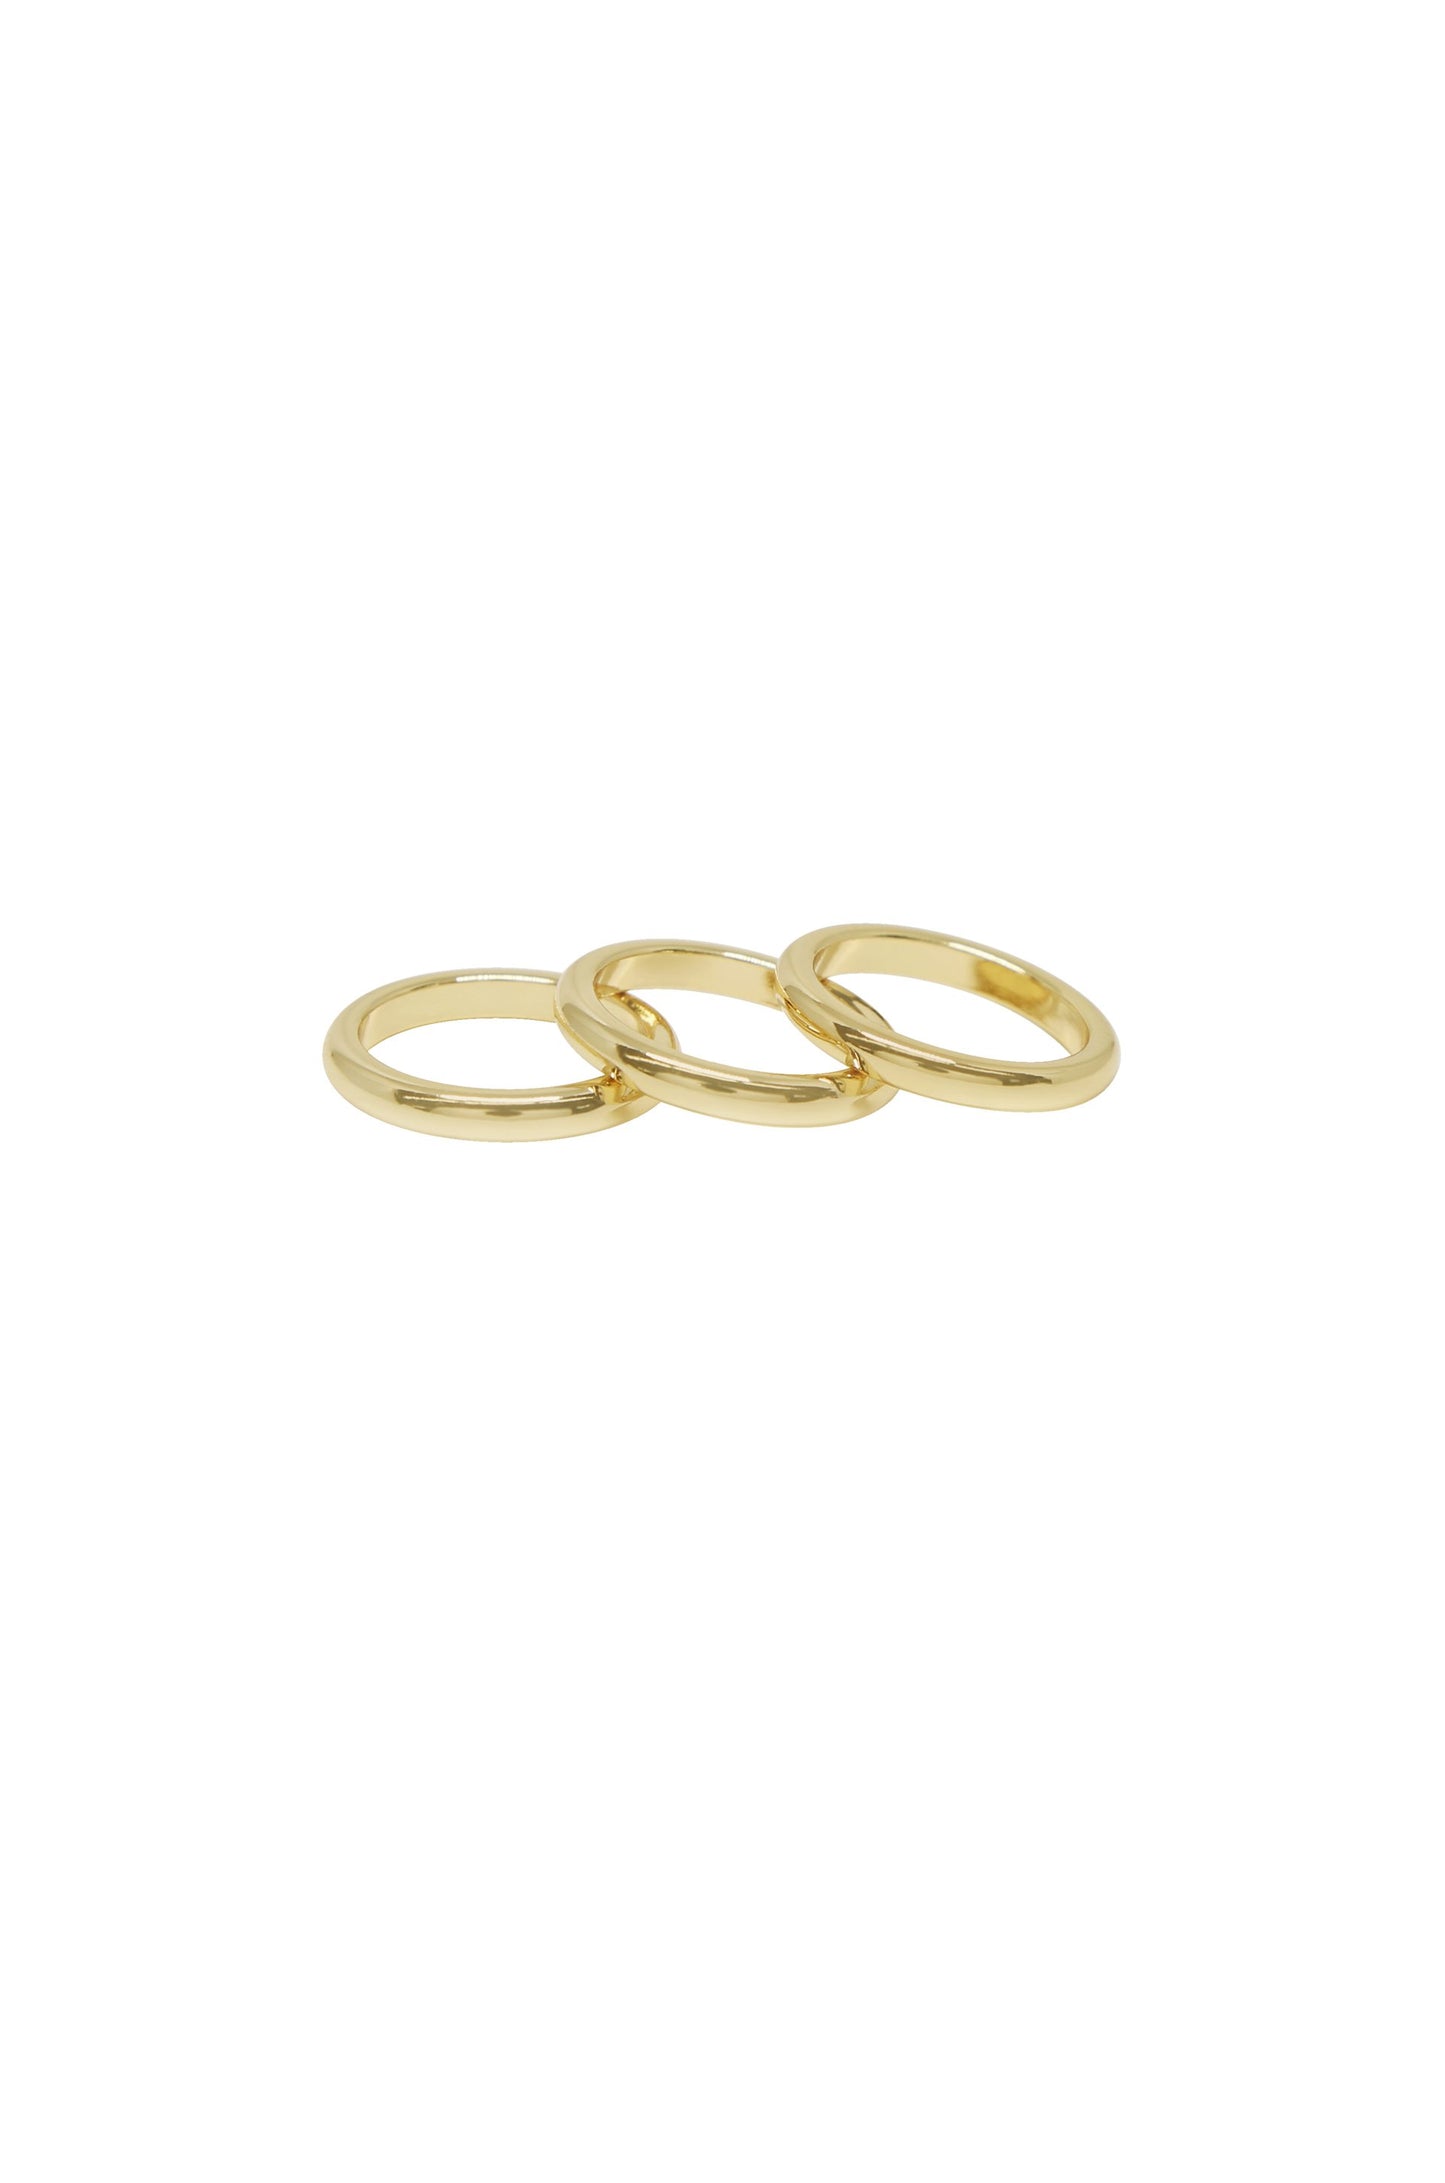 Back to Basics 18k Gold Plated Ring Set of 3 on white background  